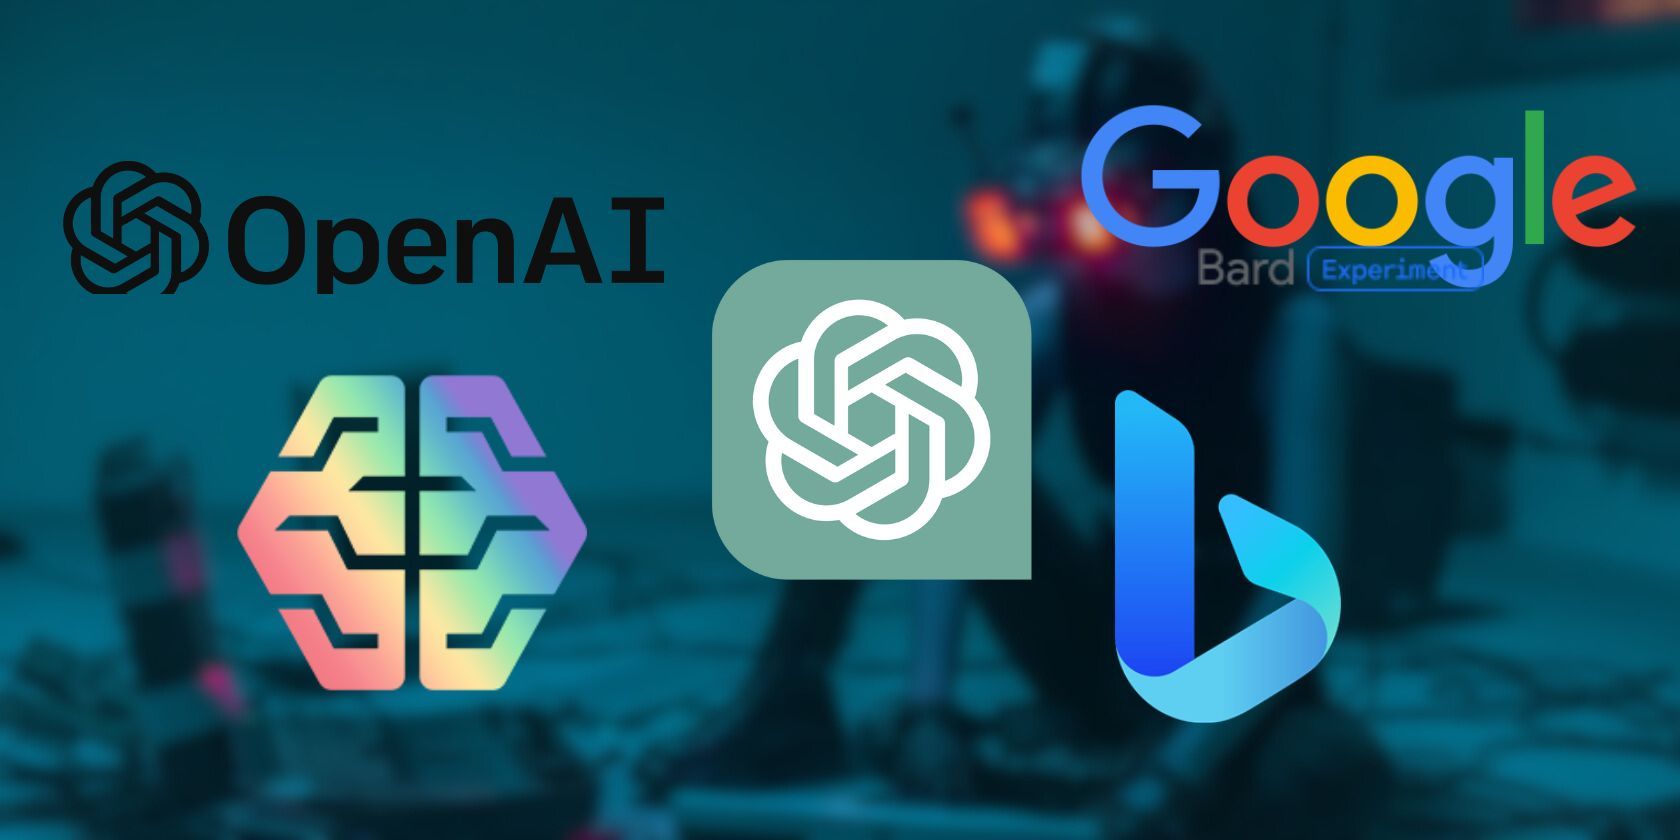 AI Tech Logos on Blurred Image of Female Hacker